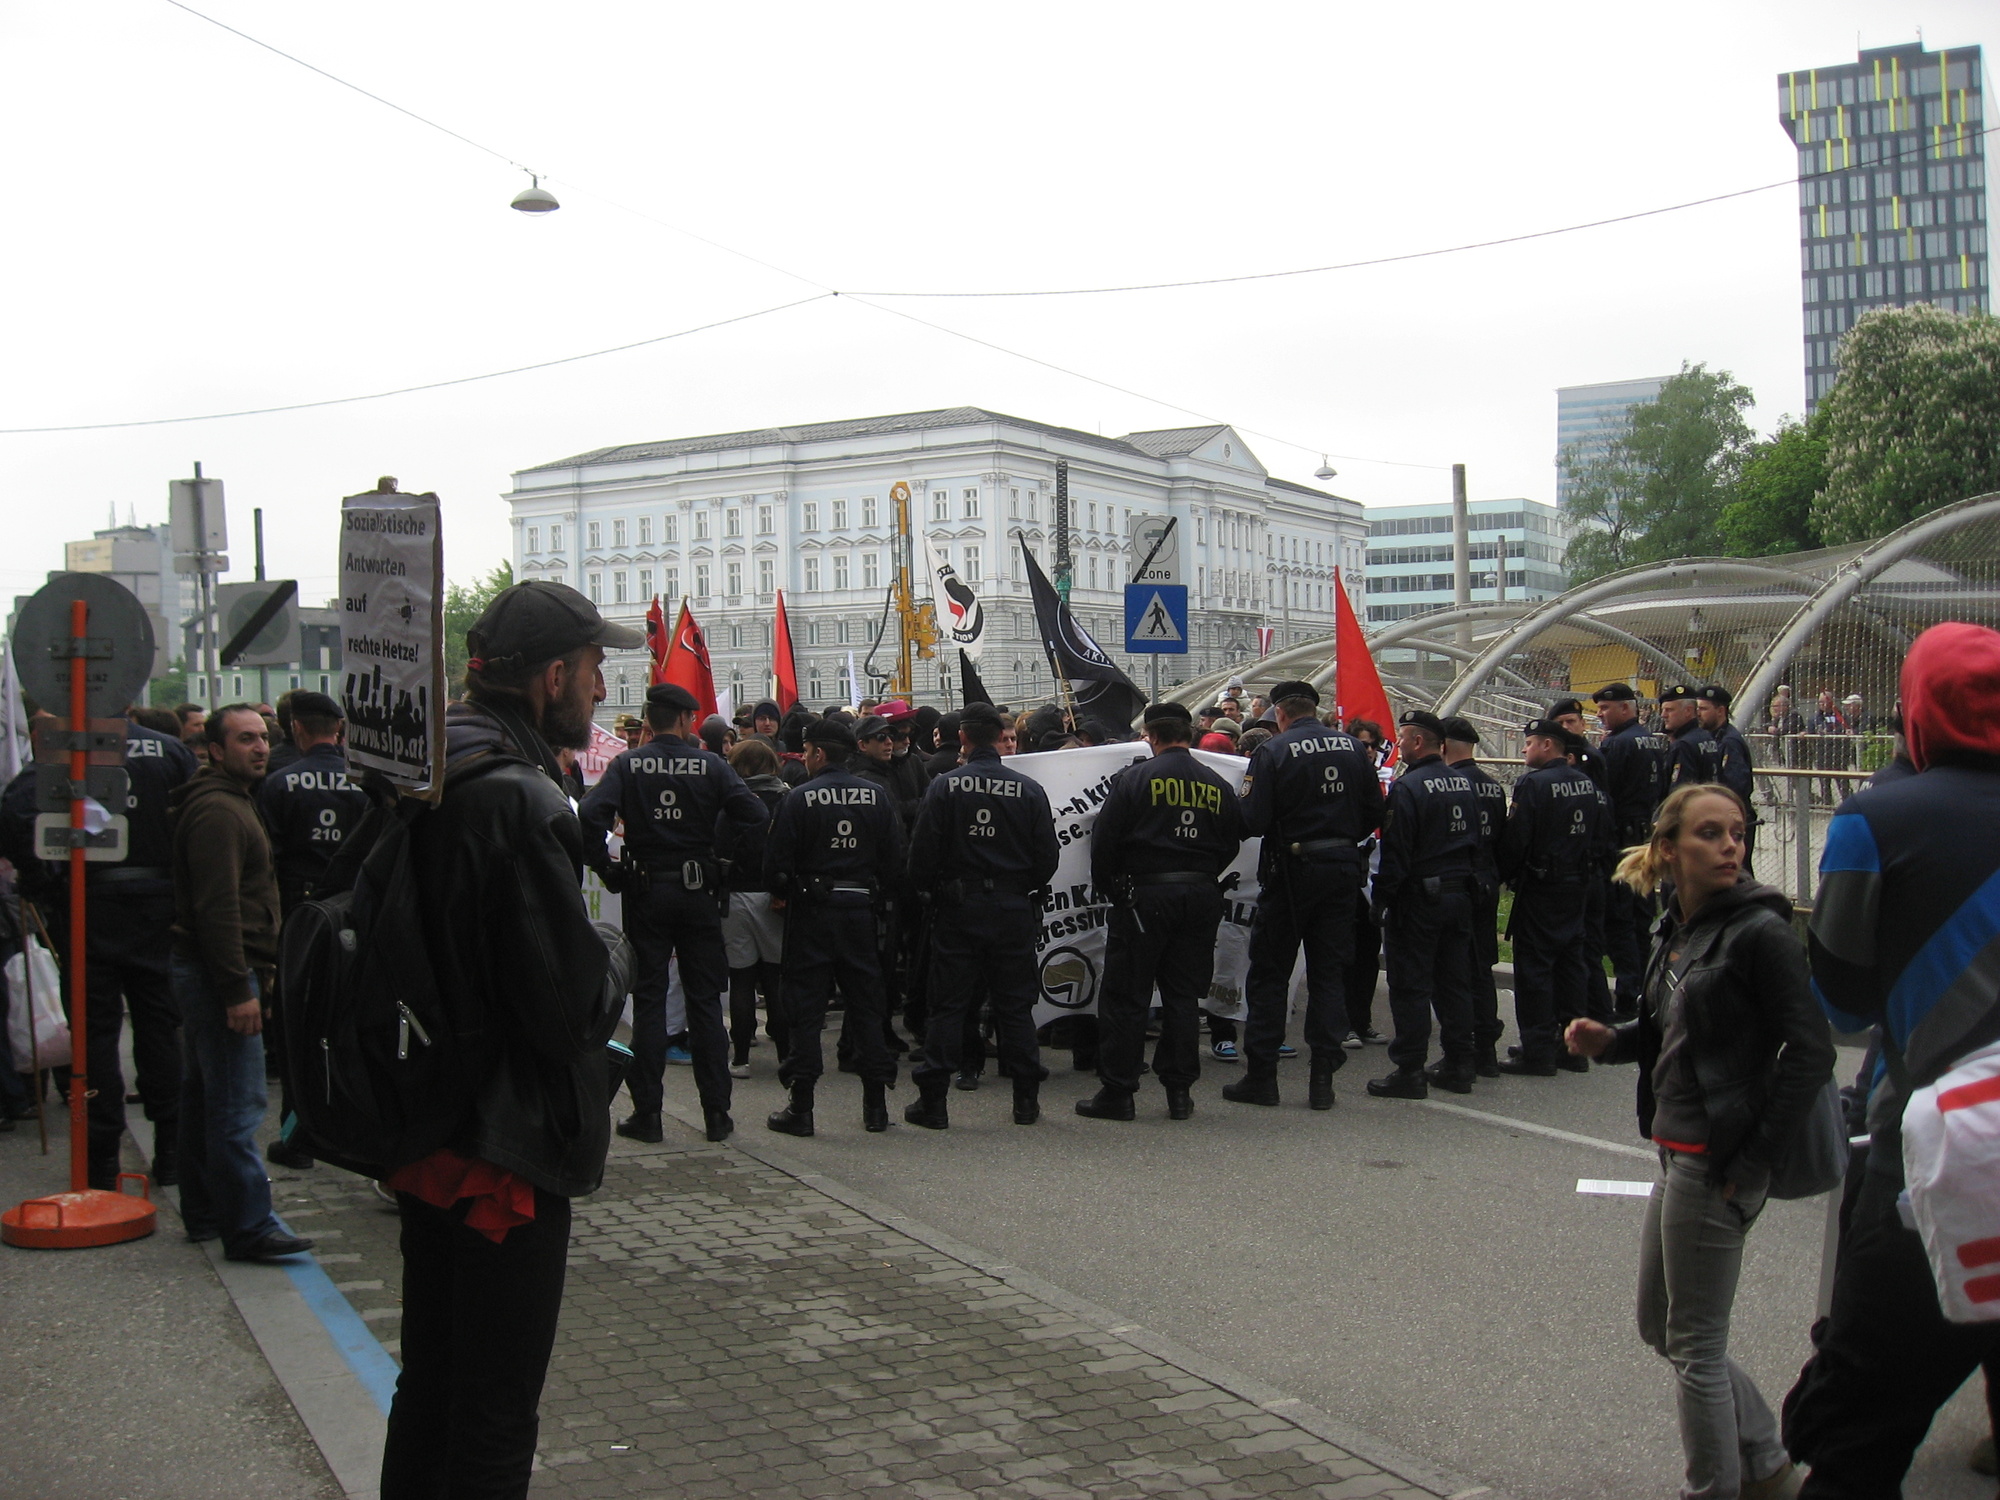 Police line and demonstrators